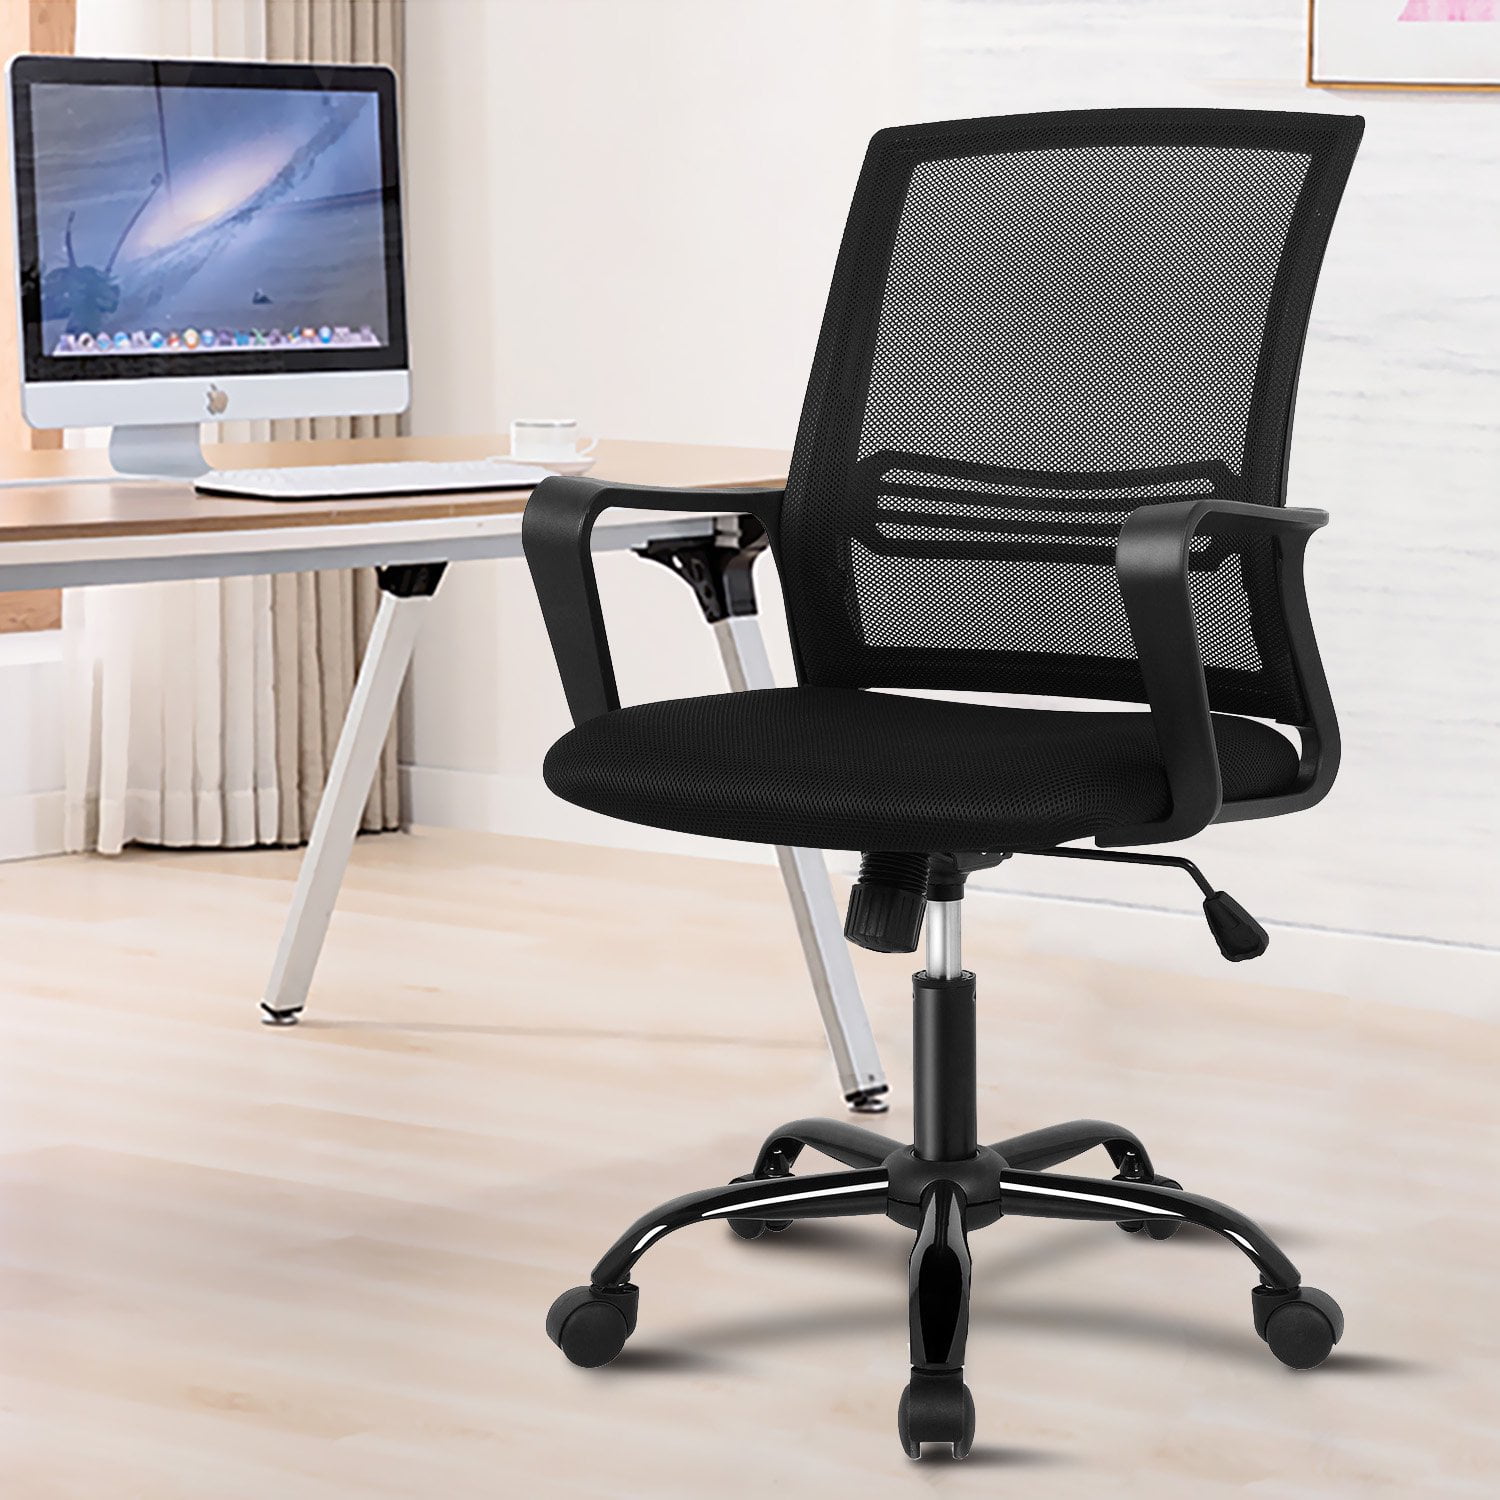 Details about   Gray Adjustable Ergonomic Mesh Swivel Computer Office Desk Task Rolling Chair Mi 